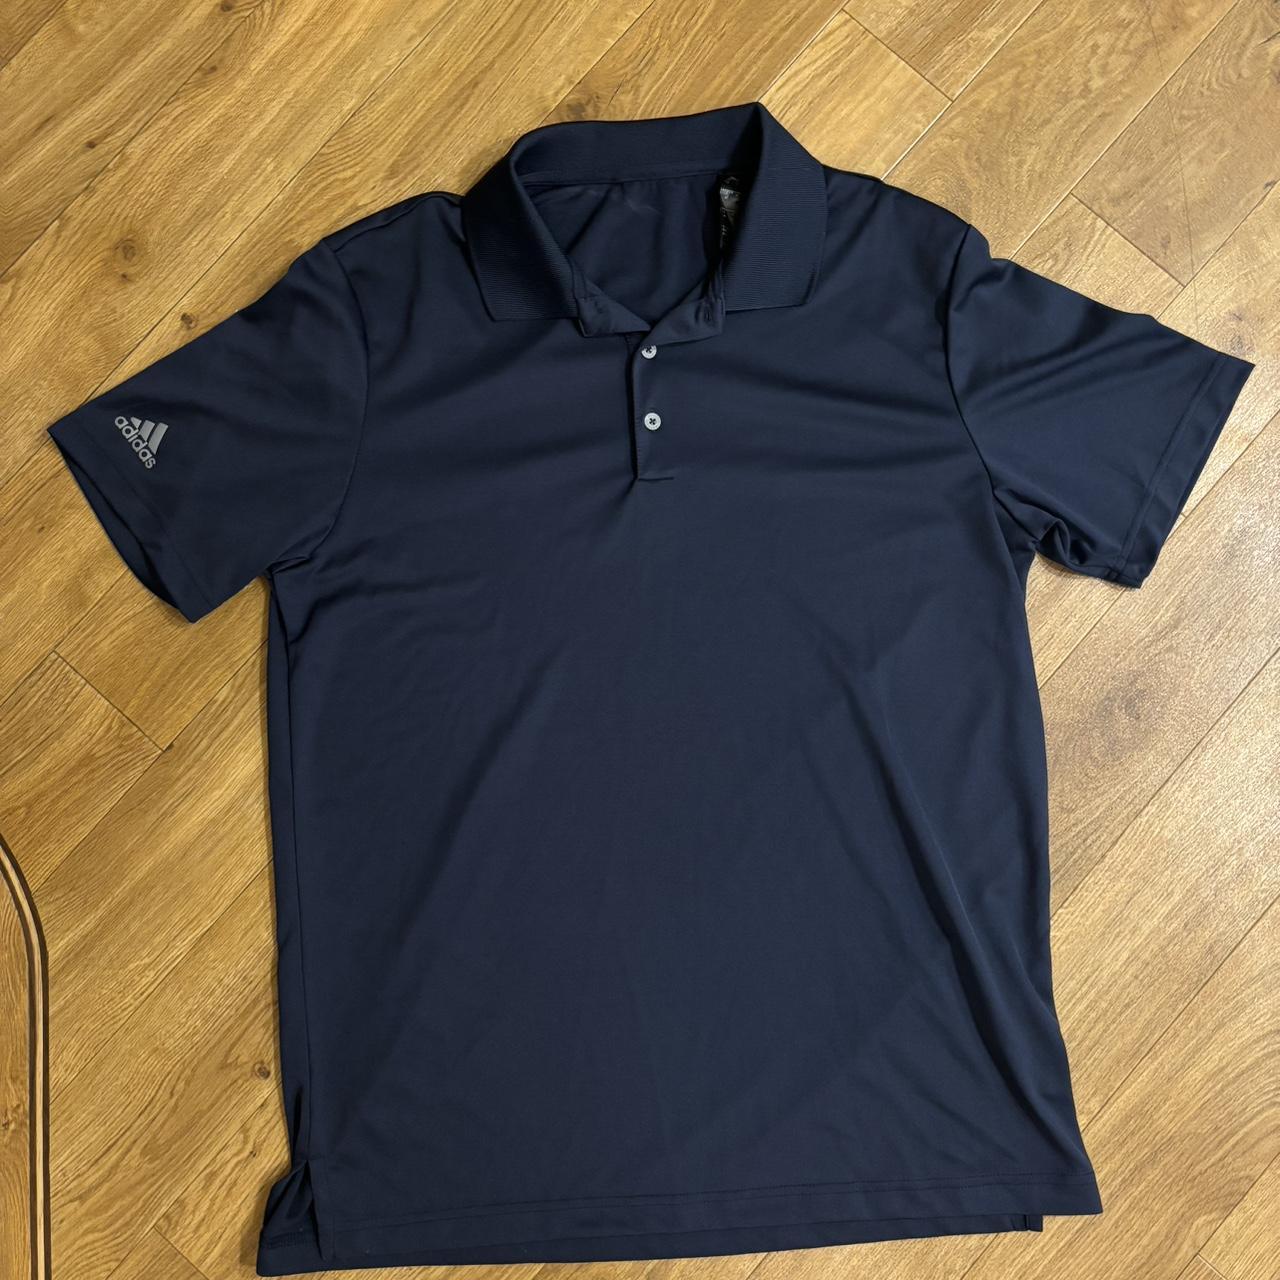 Medium navy Adidas polo shirt. Good for golf, very... - Depop